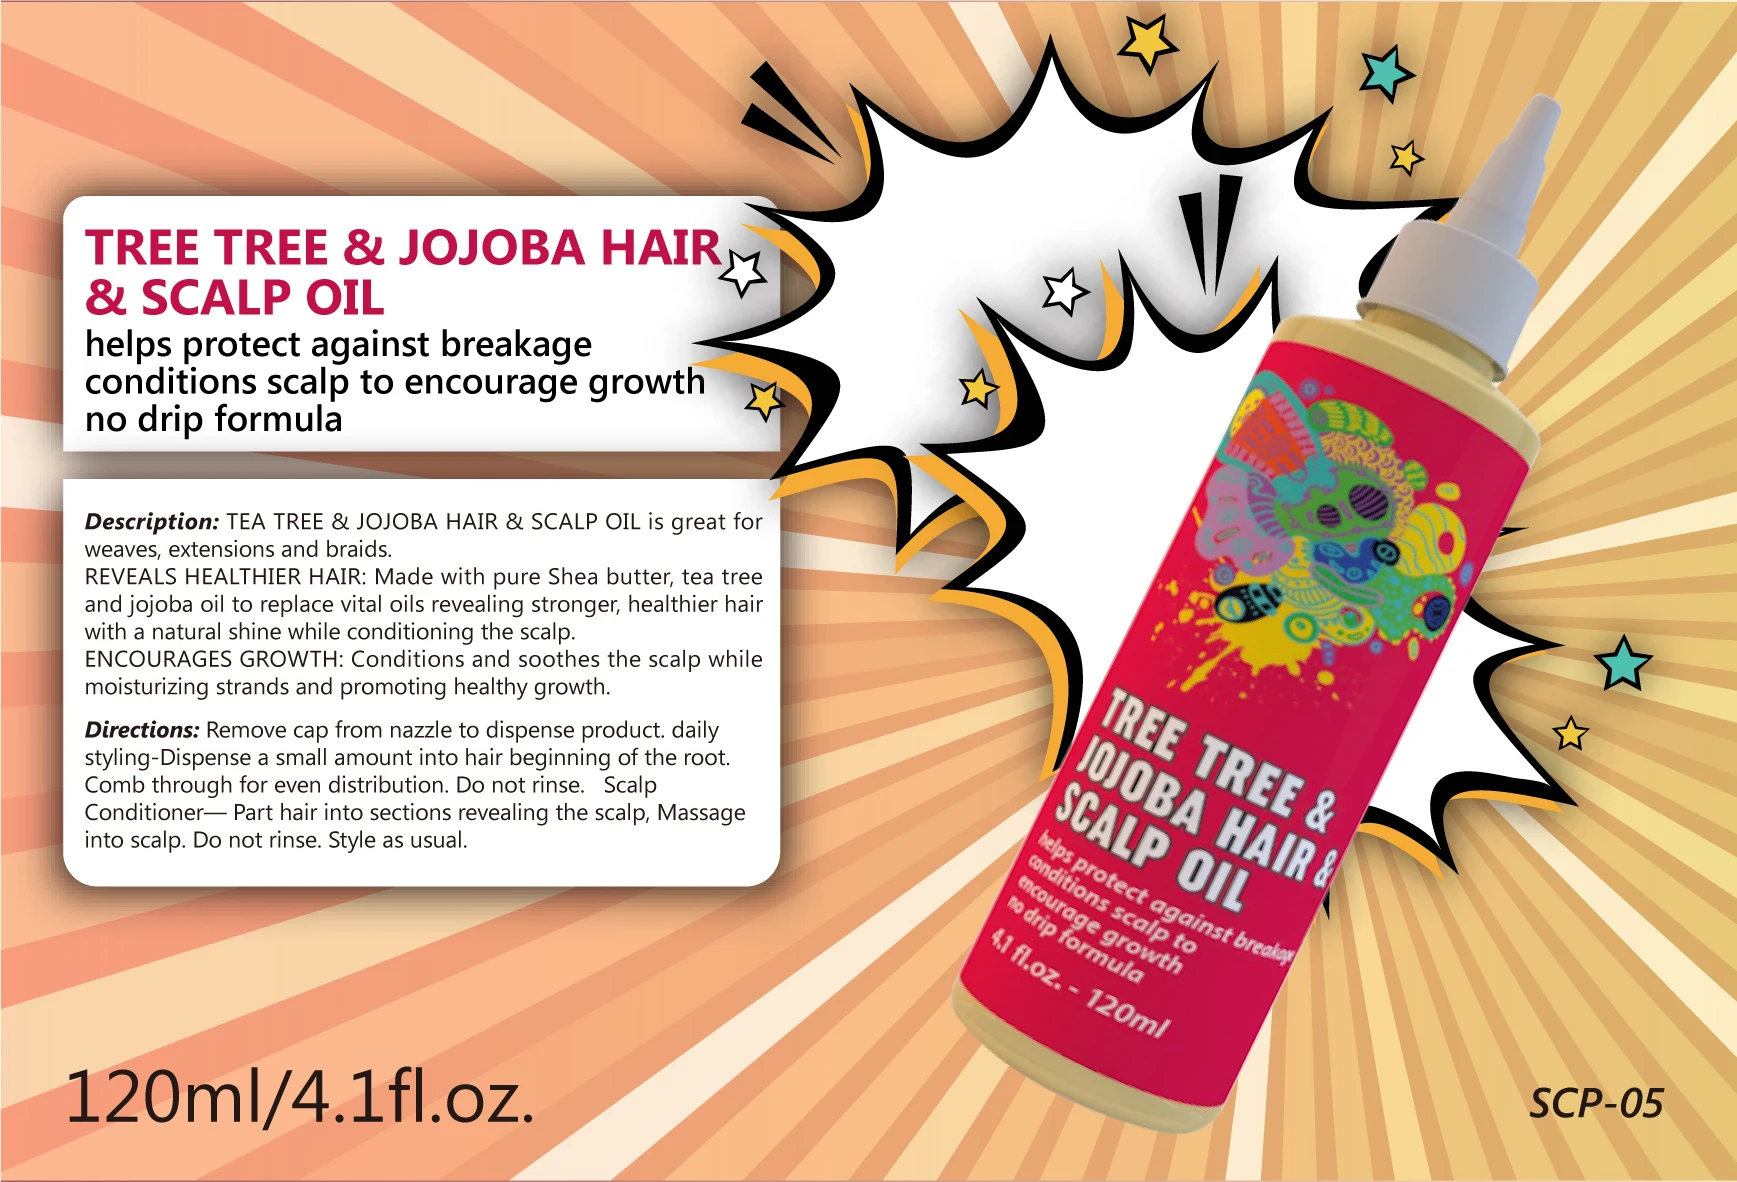 Professional dandruff Tree Tree & Jojoba Hair & Scalp Oil treatment system made in China